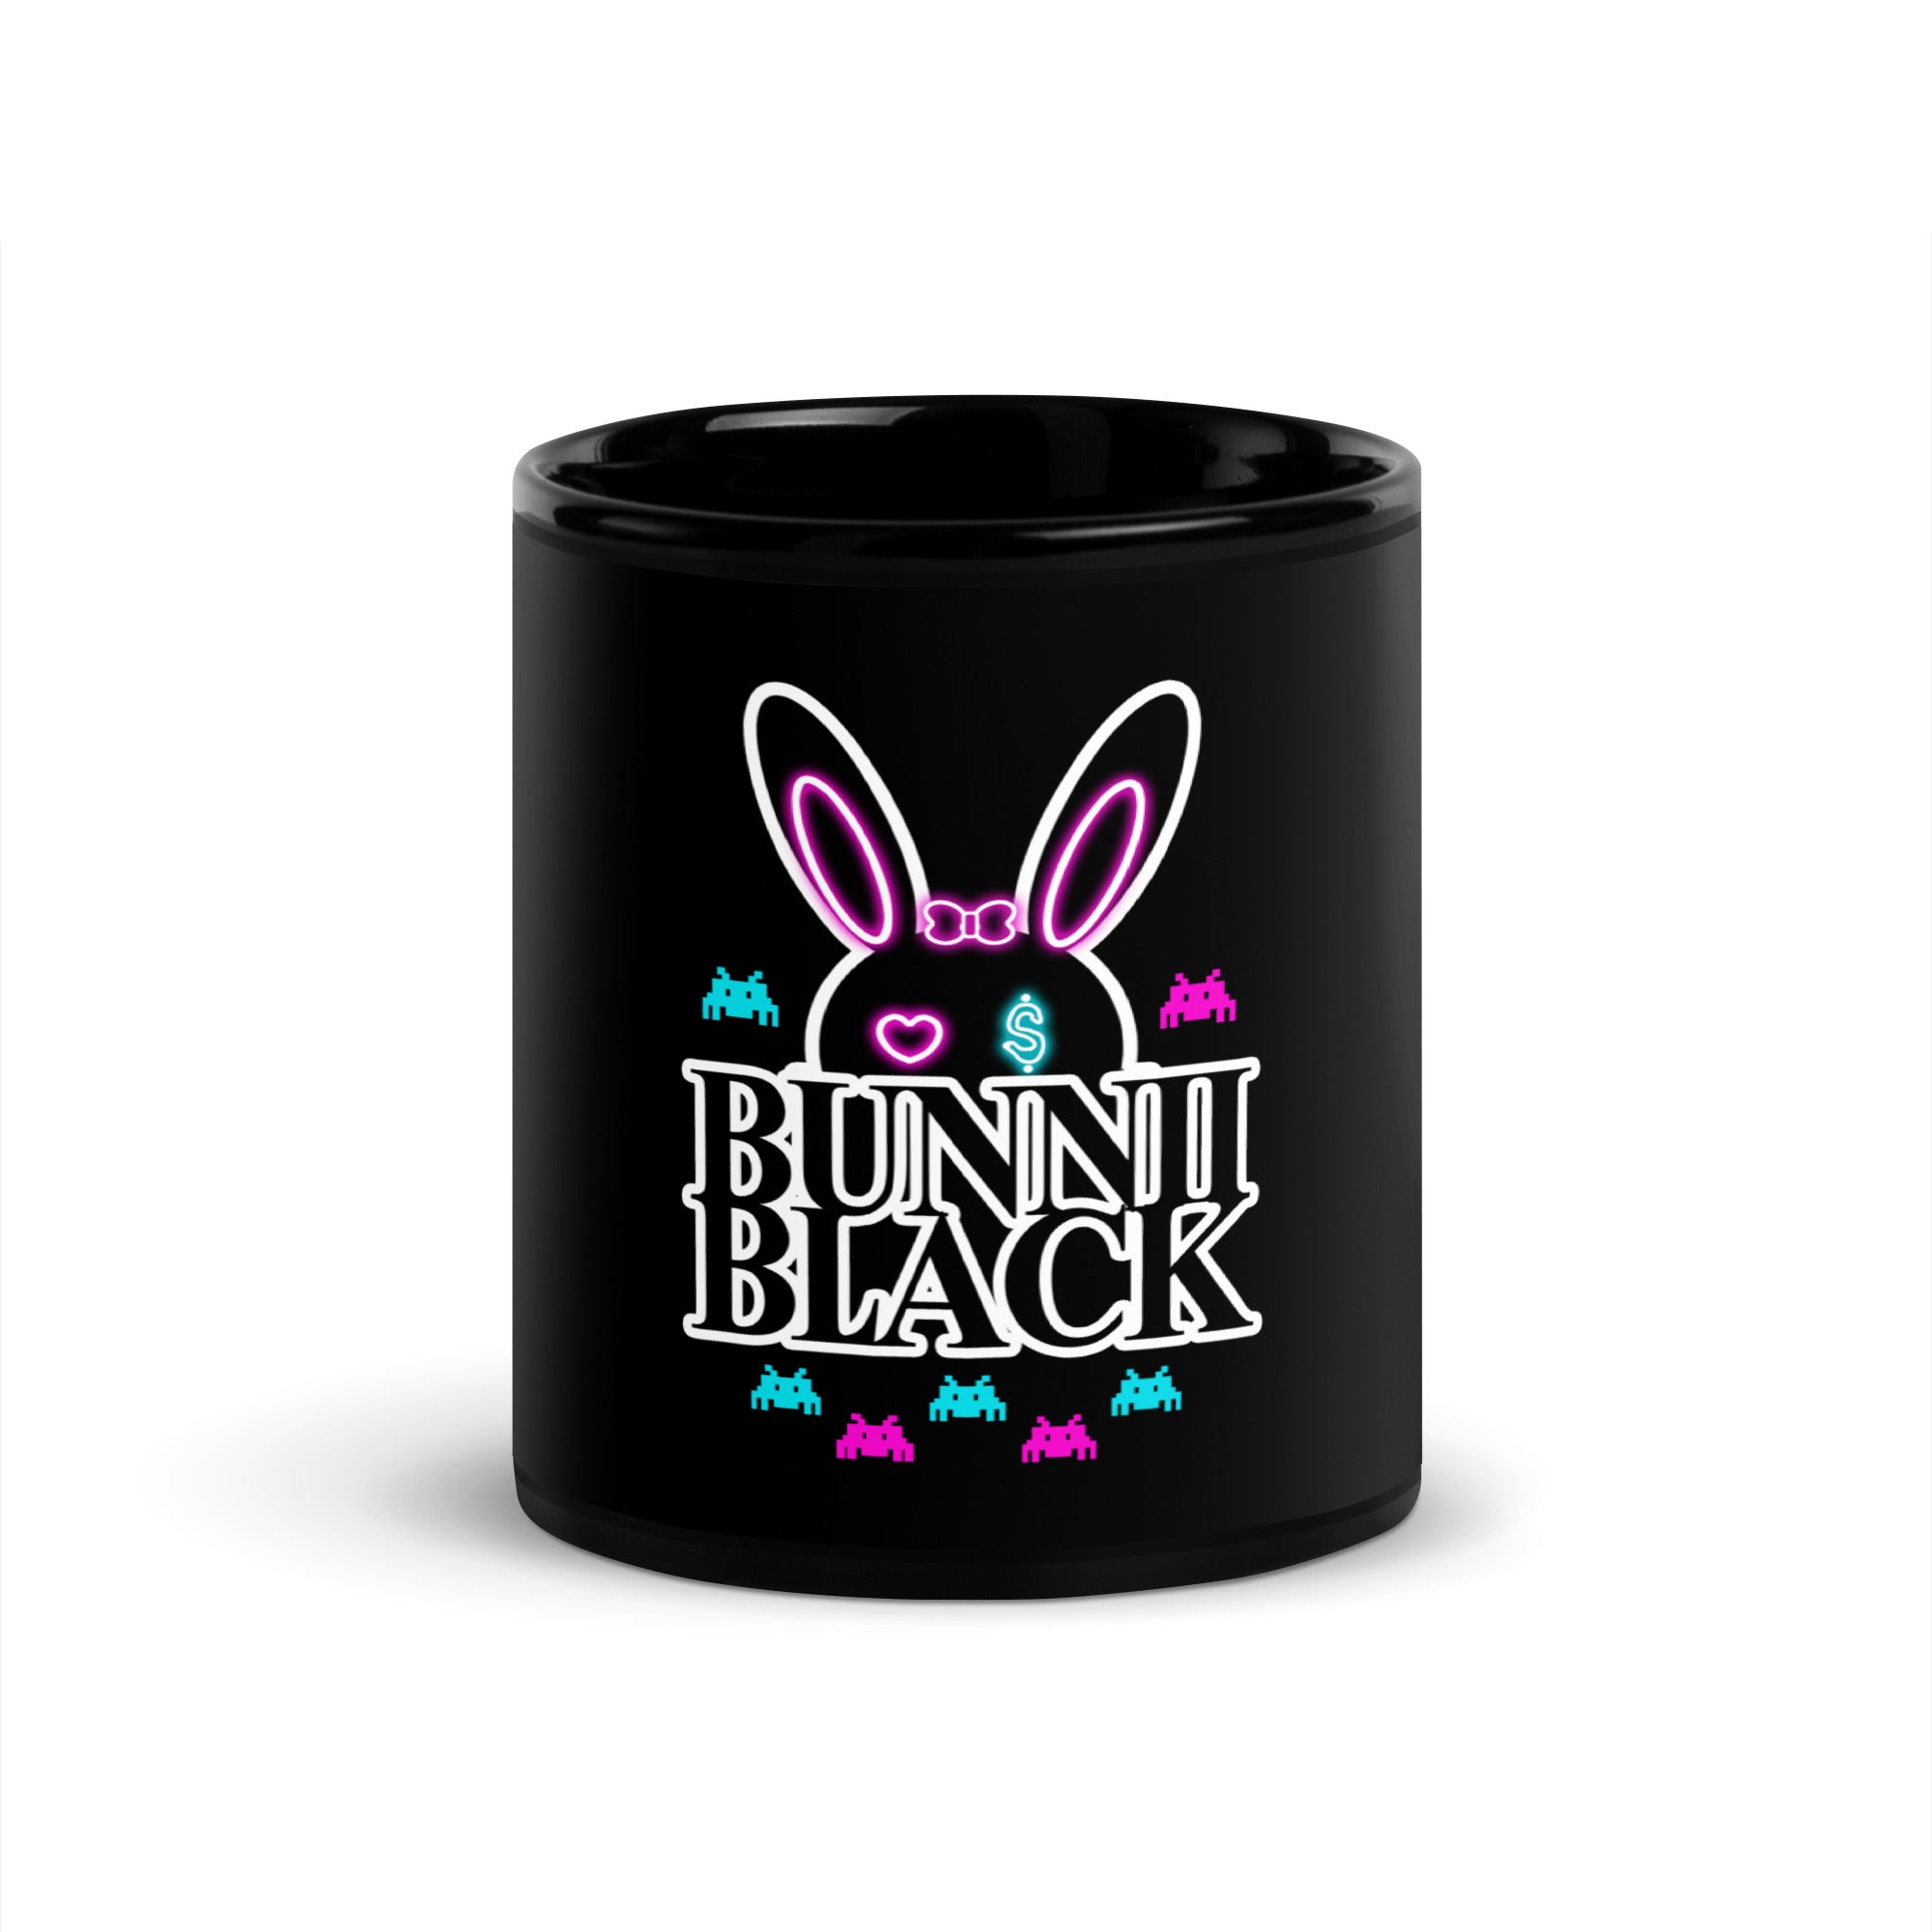 BUNNII GANG "BUNNII BLACK" Black Glossy Mug